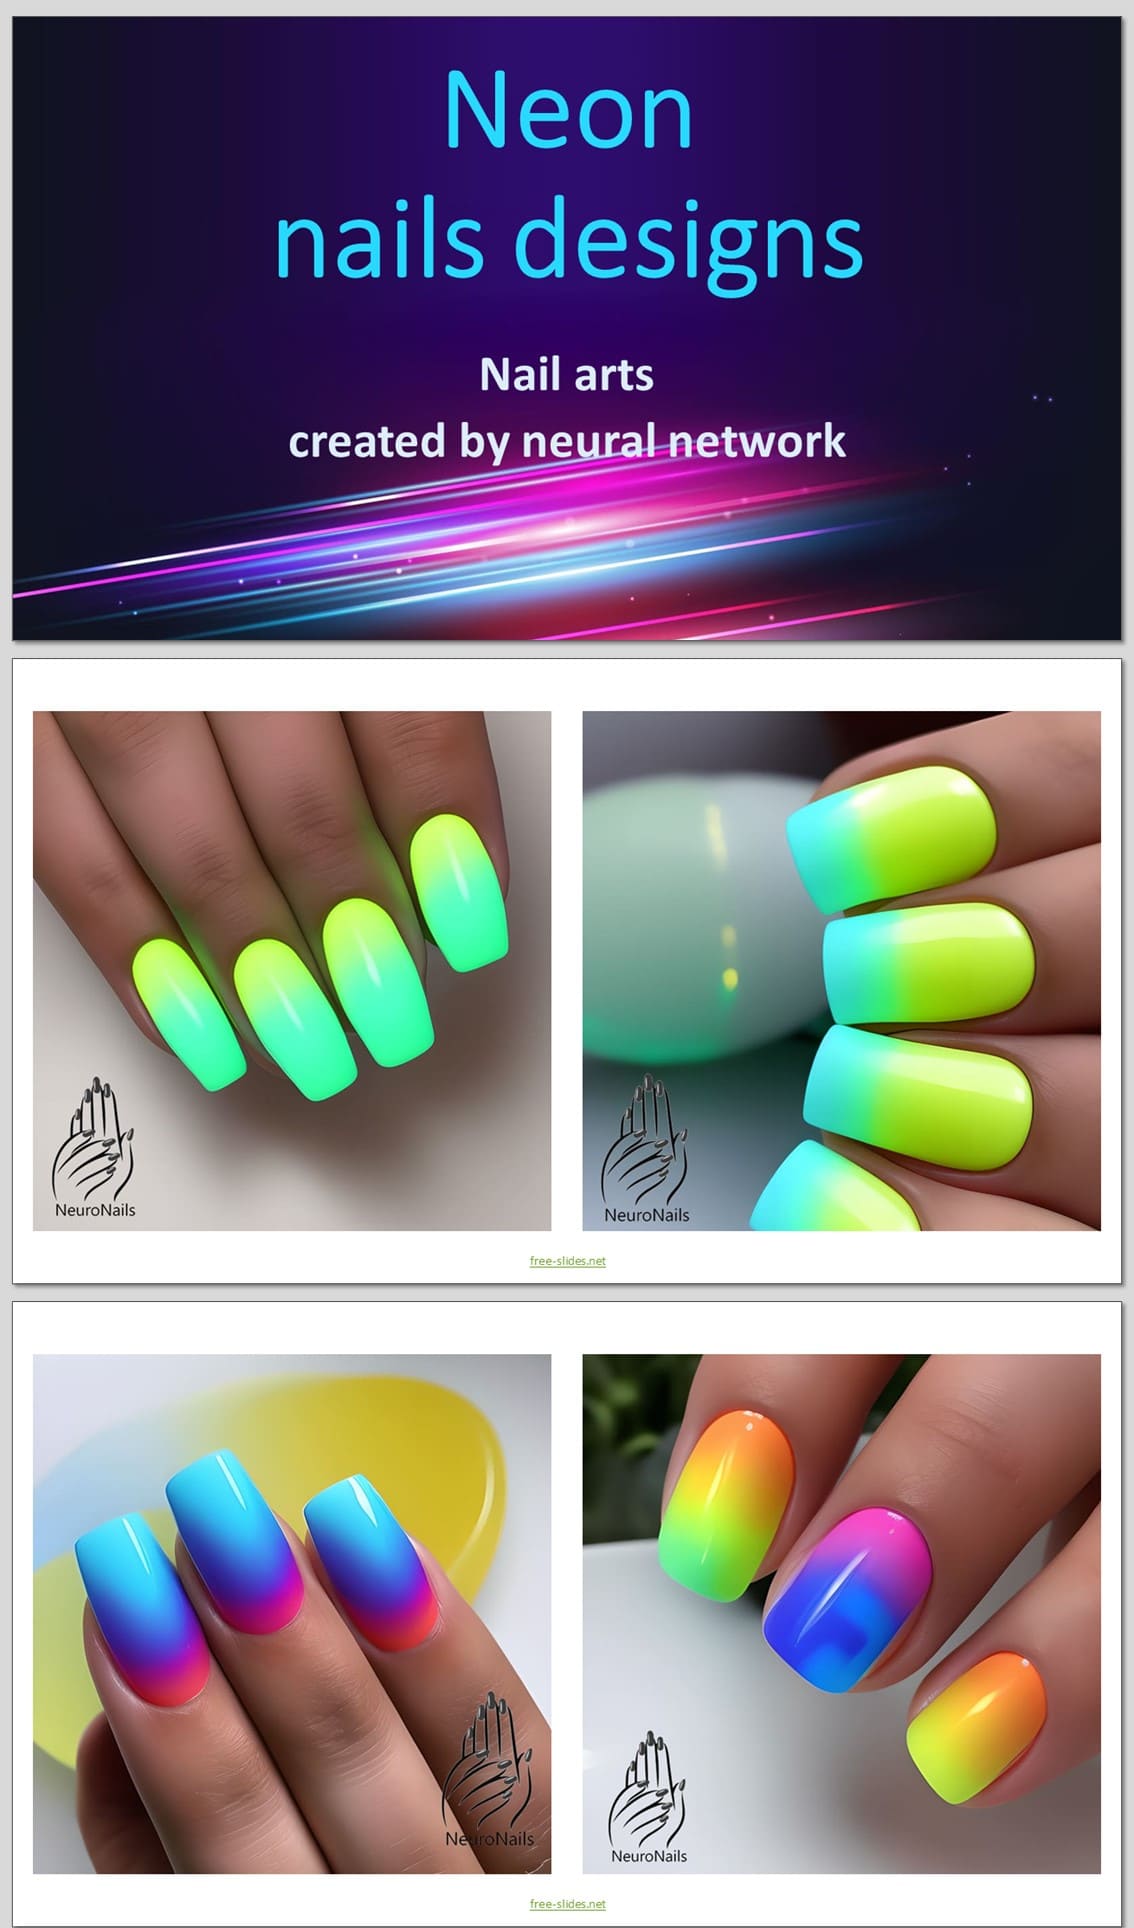 Neon network creates fall nails designs